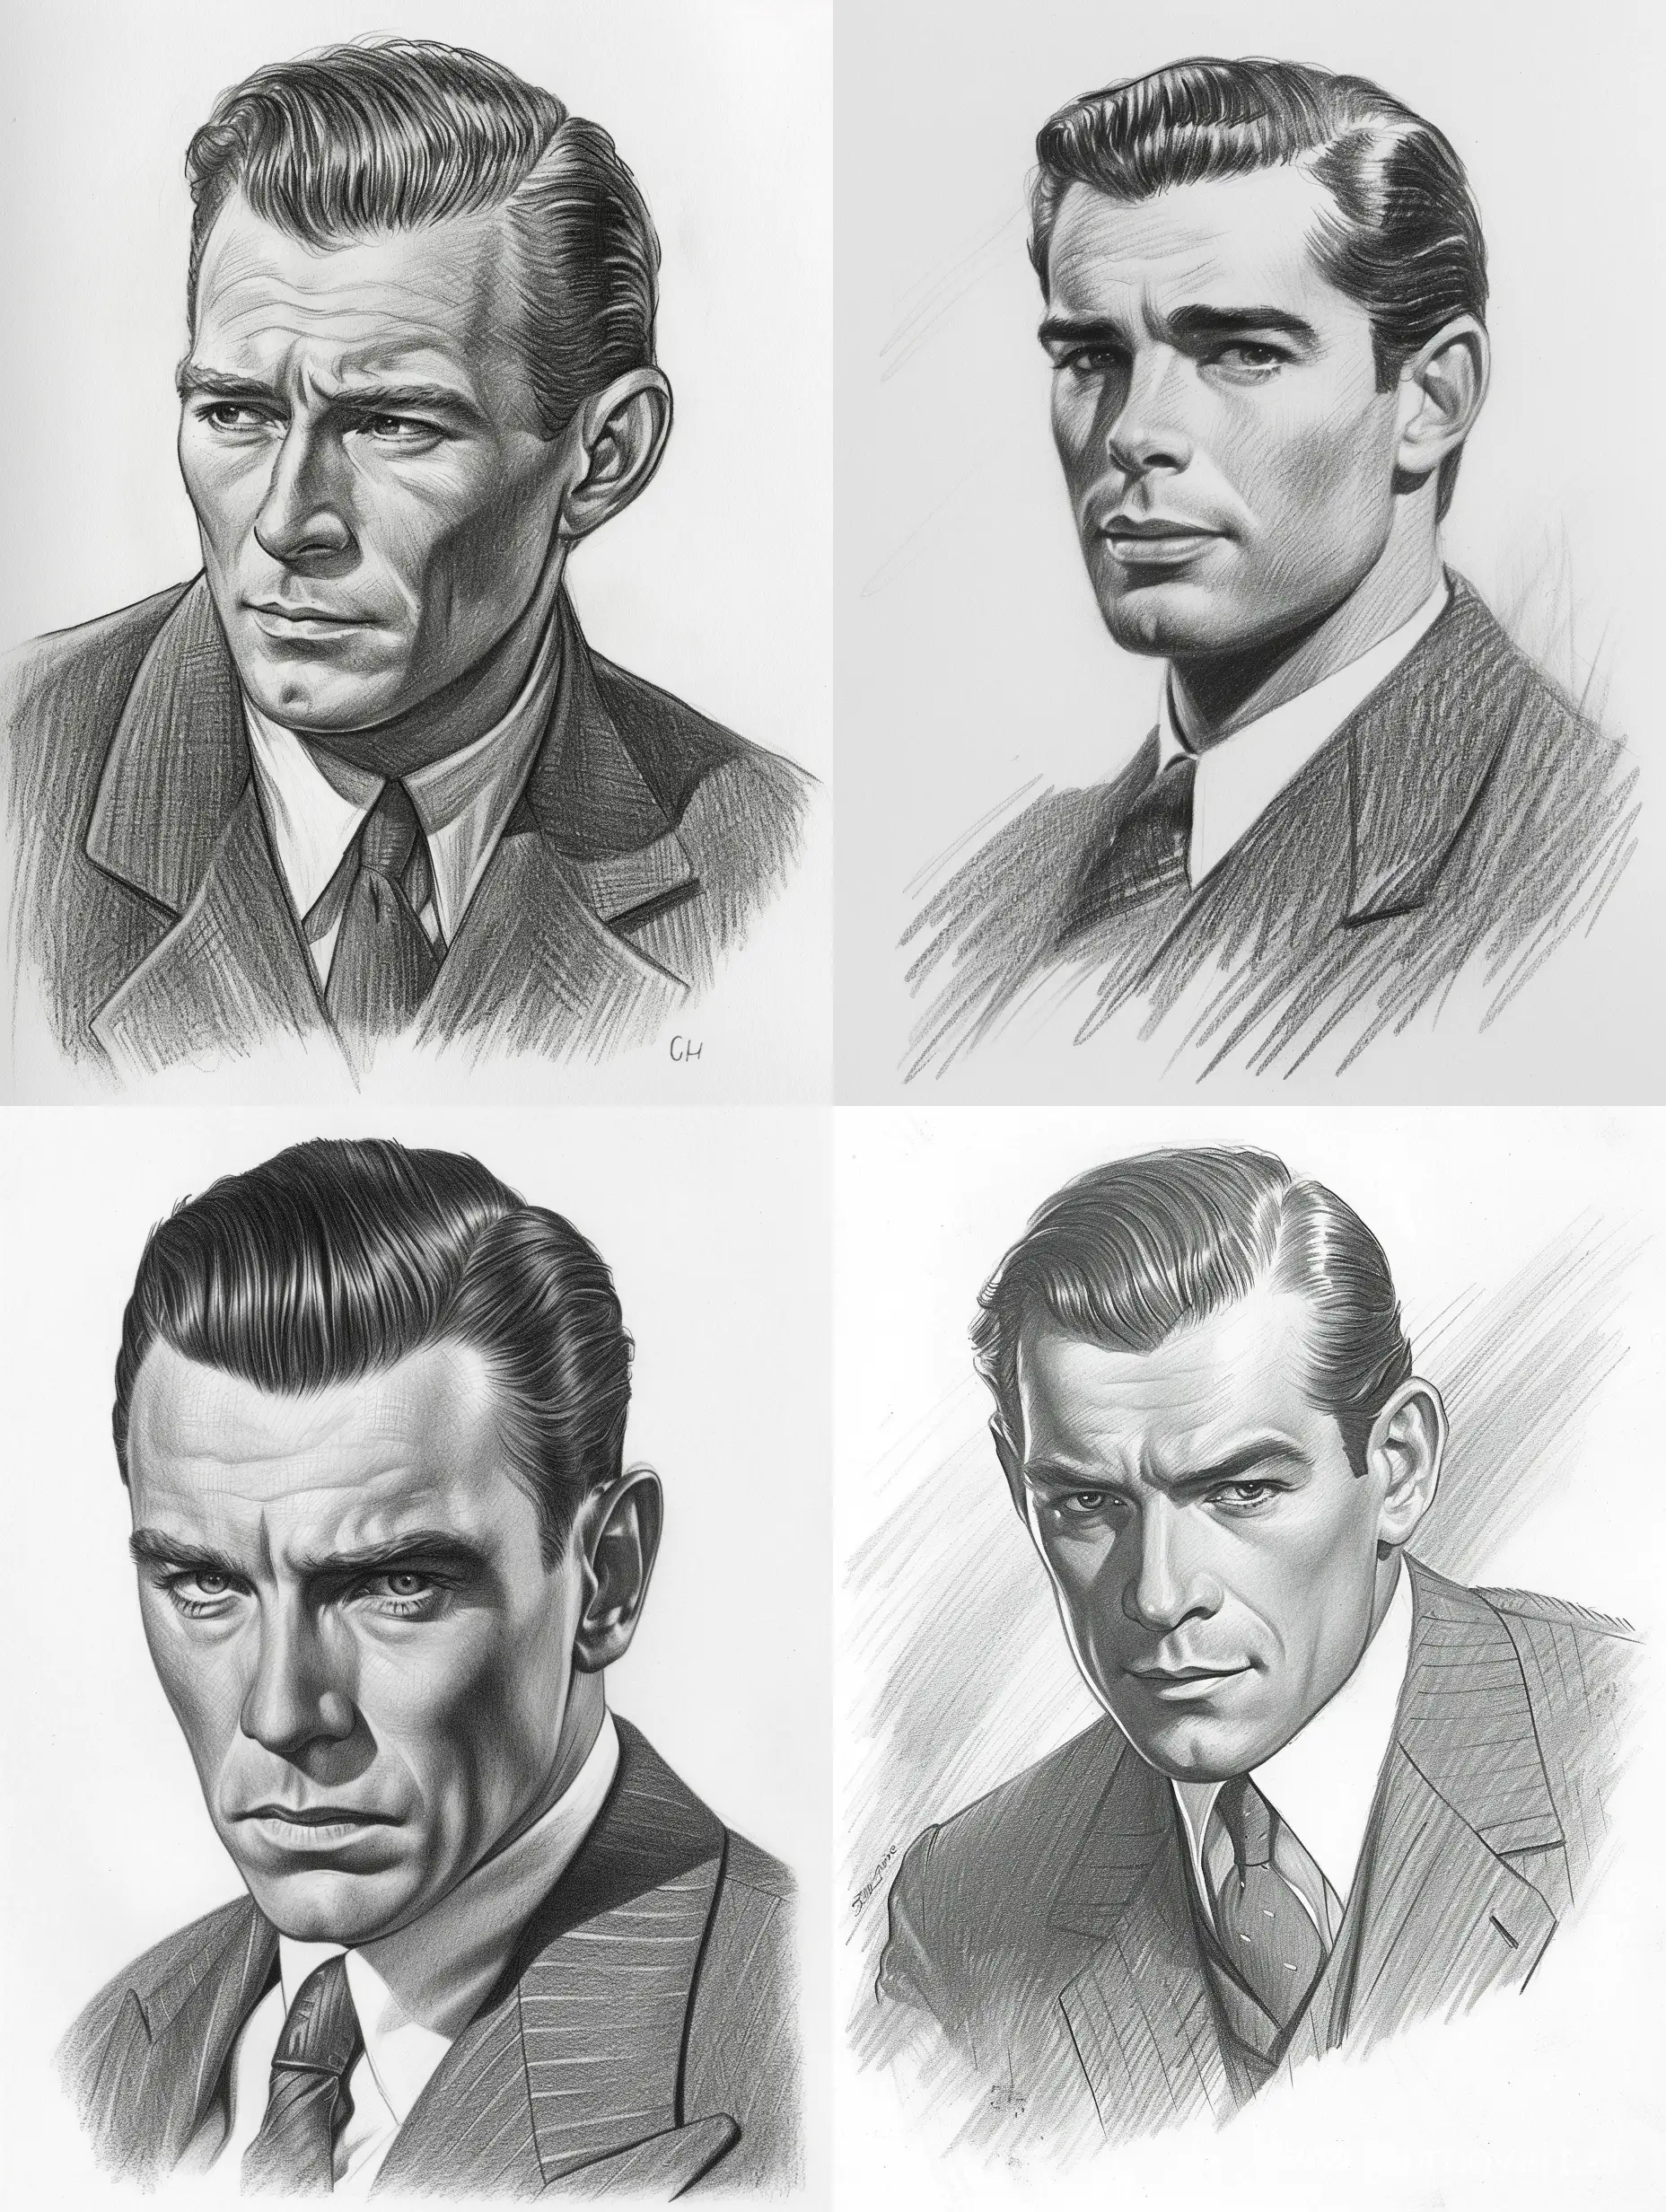 Dapper-1940s-Spy-Man-Elegant-Suit-and-SlickedBack-Hair-Pencil-Drawing